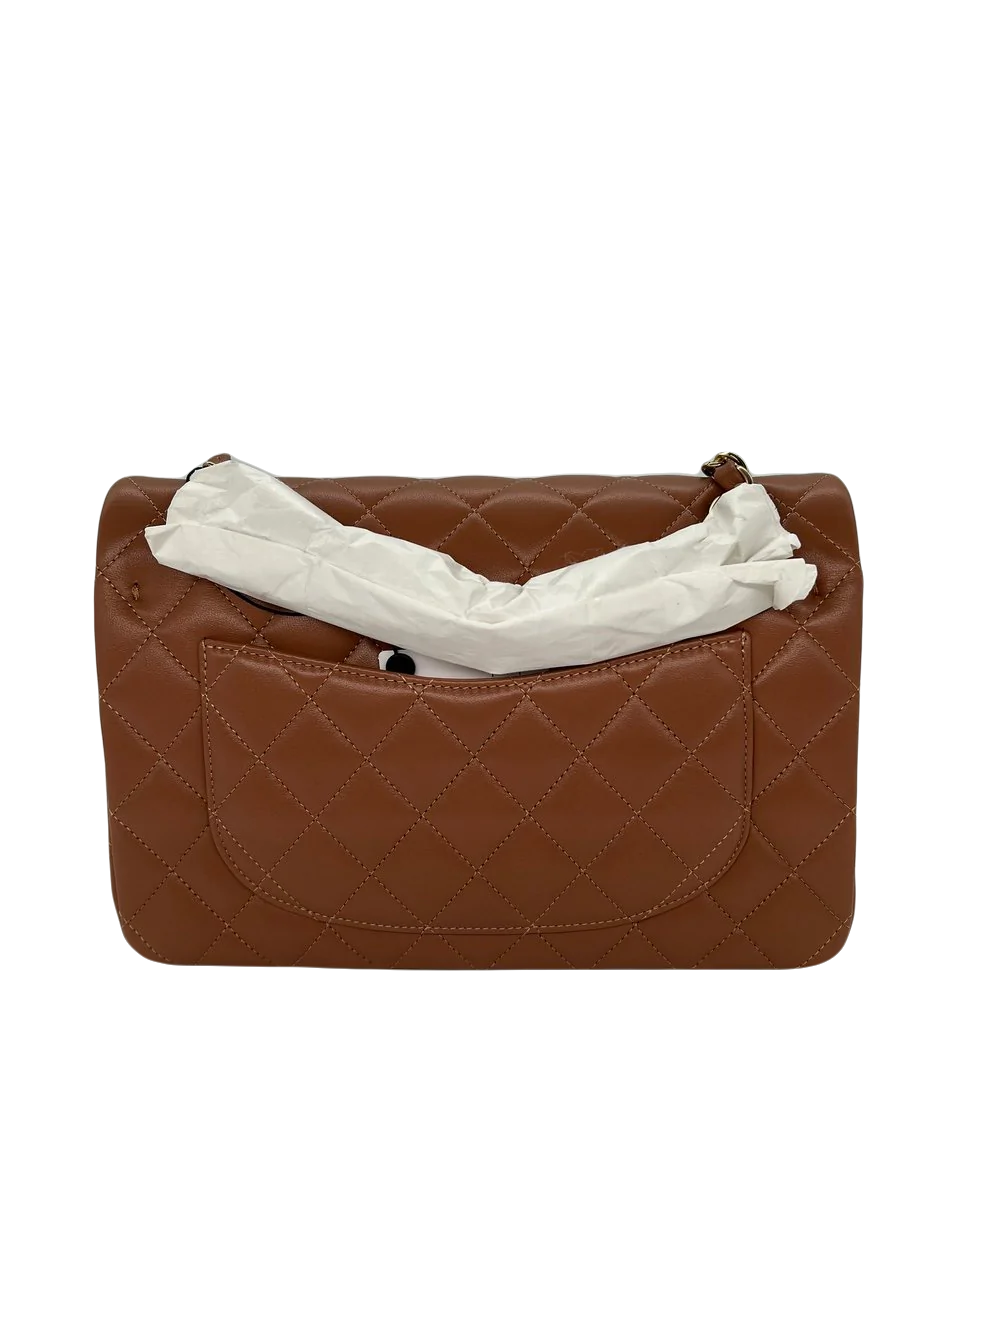 Chanel Classic Flap Bag - Small Caramel GHW